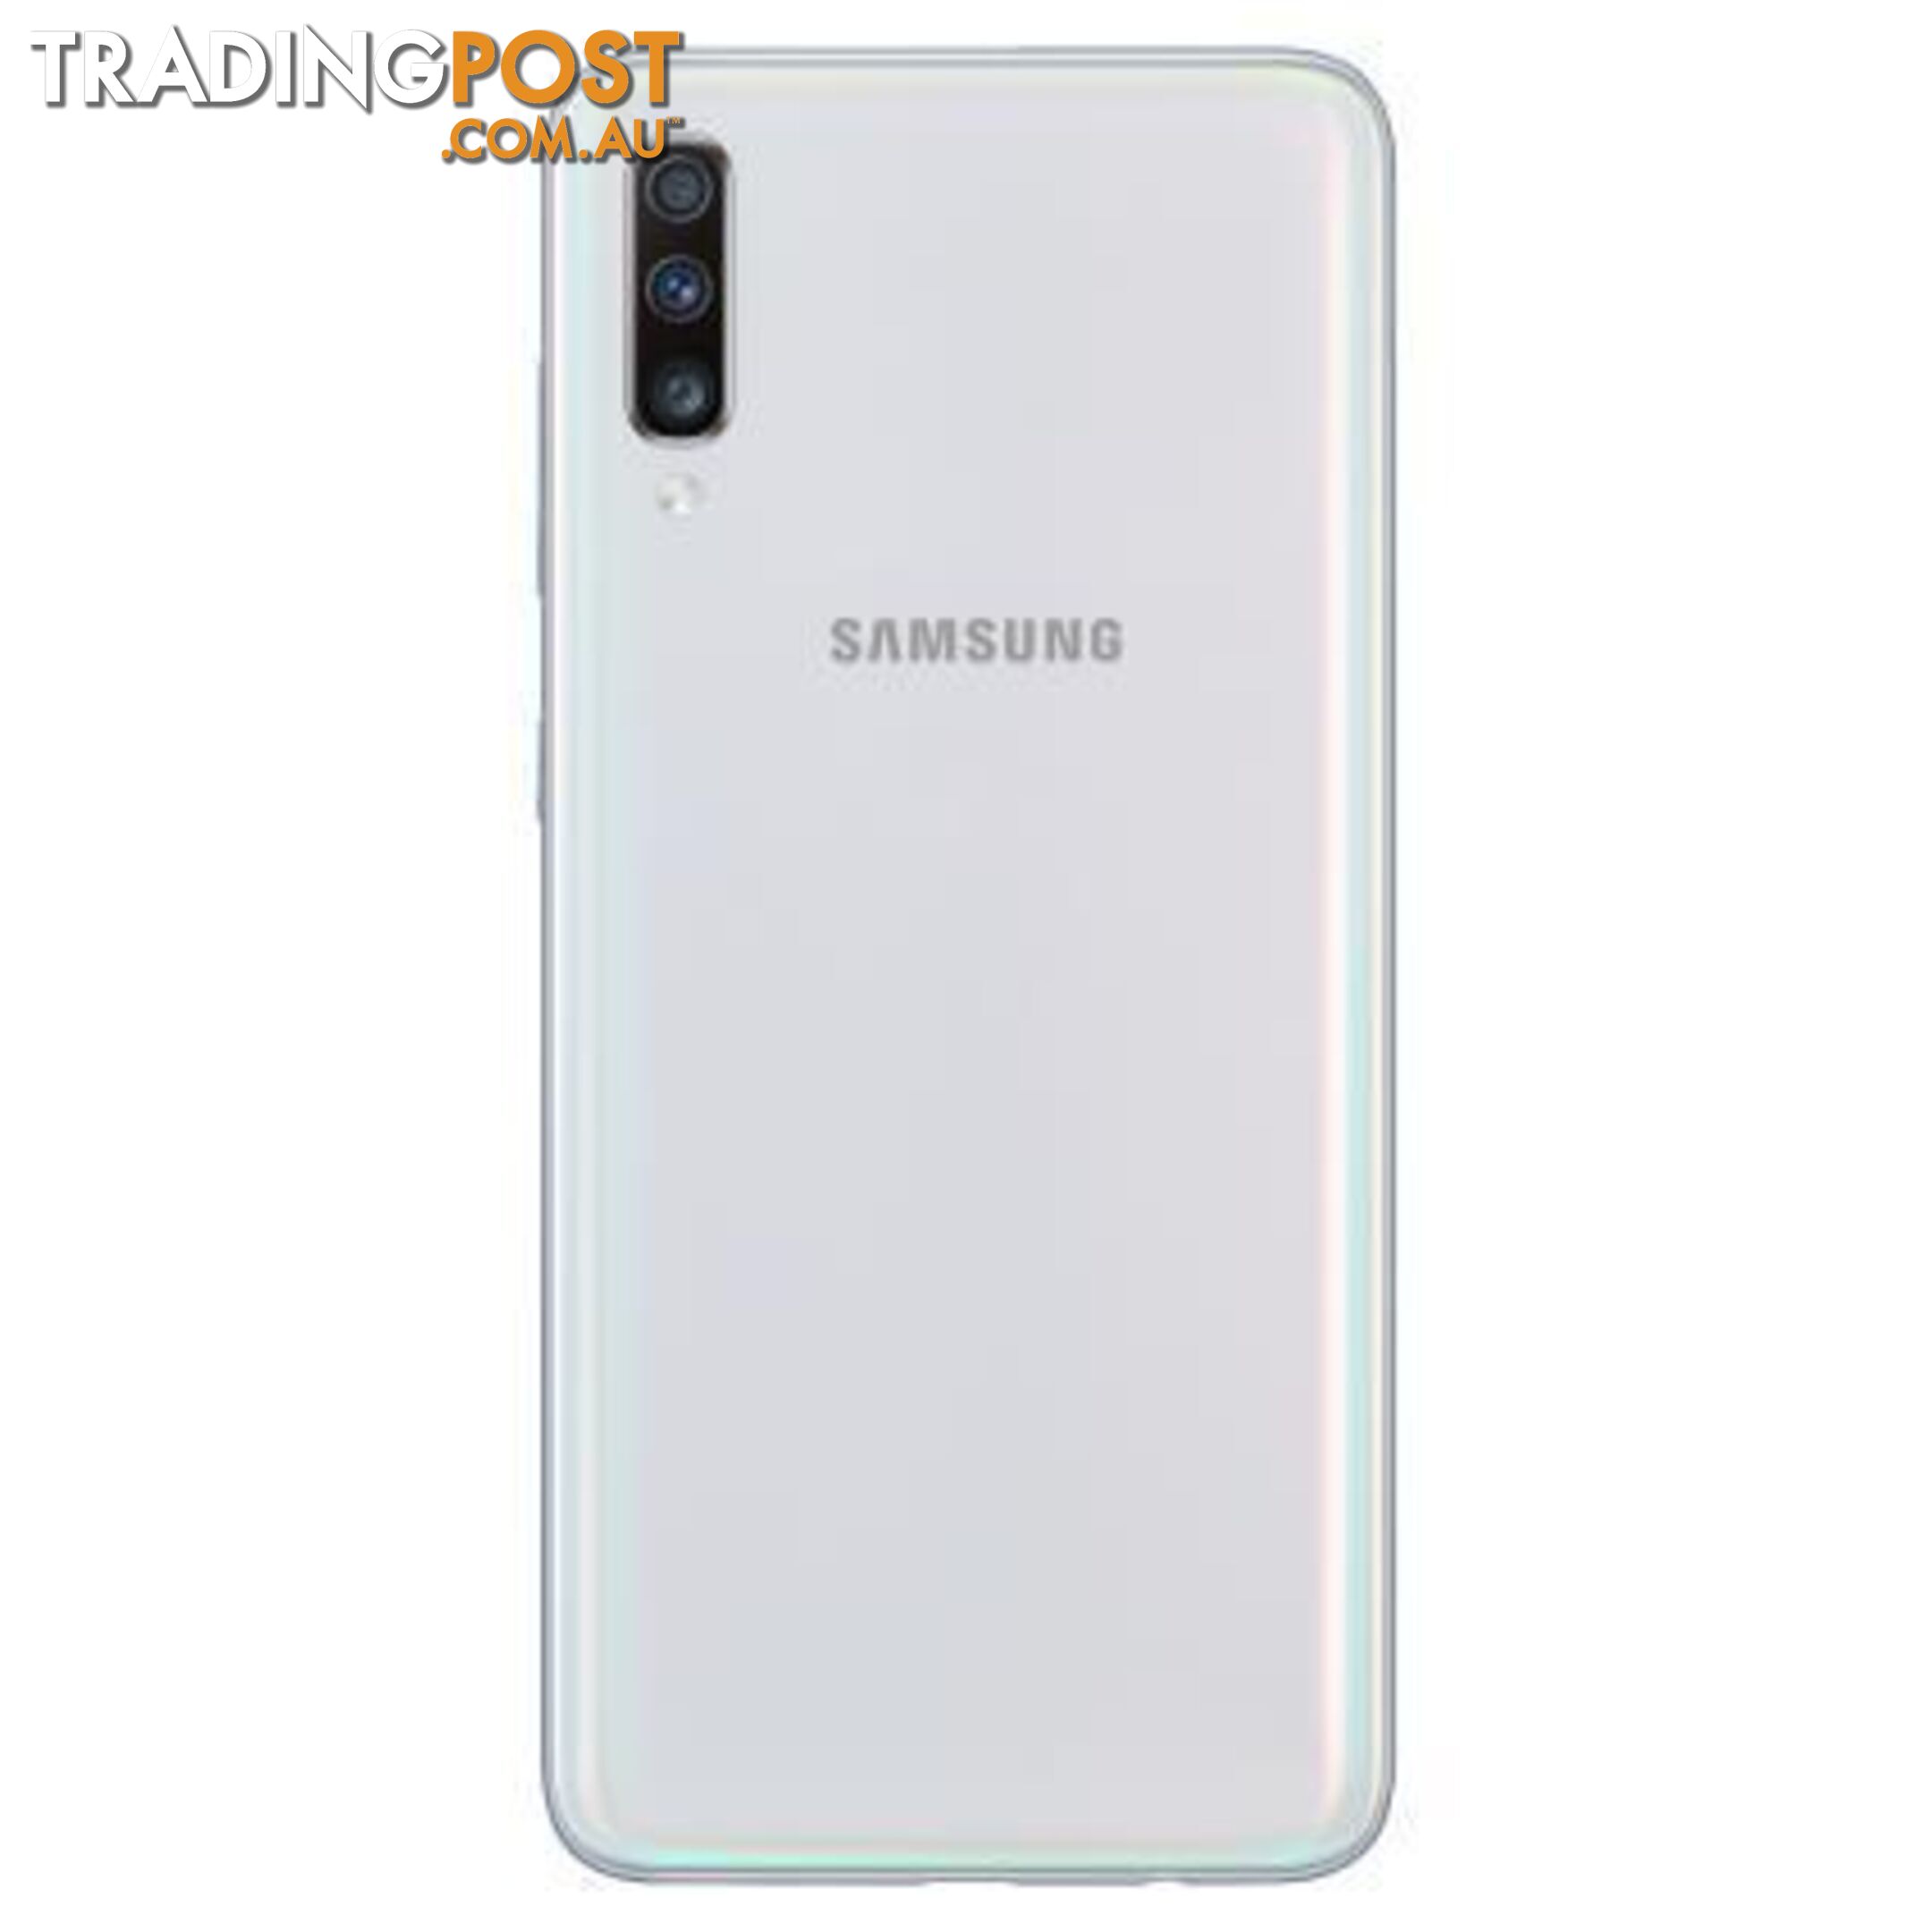 Samsung Galaxy A70 128GB - 082551 - mobile phone